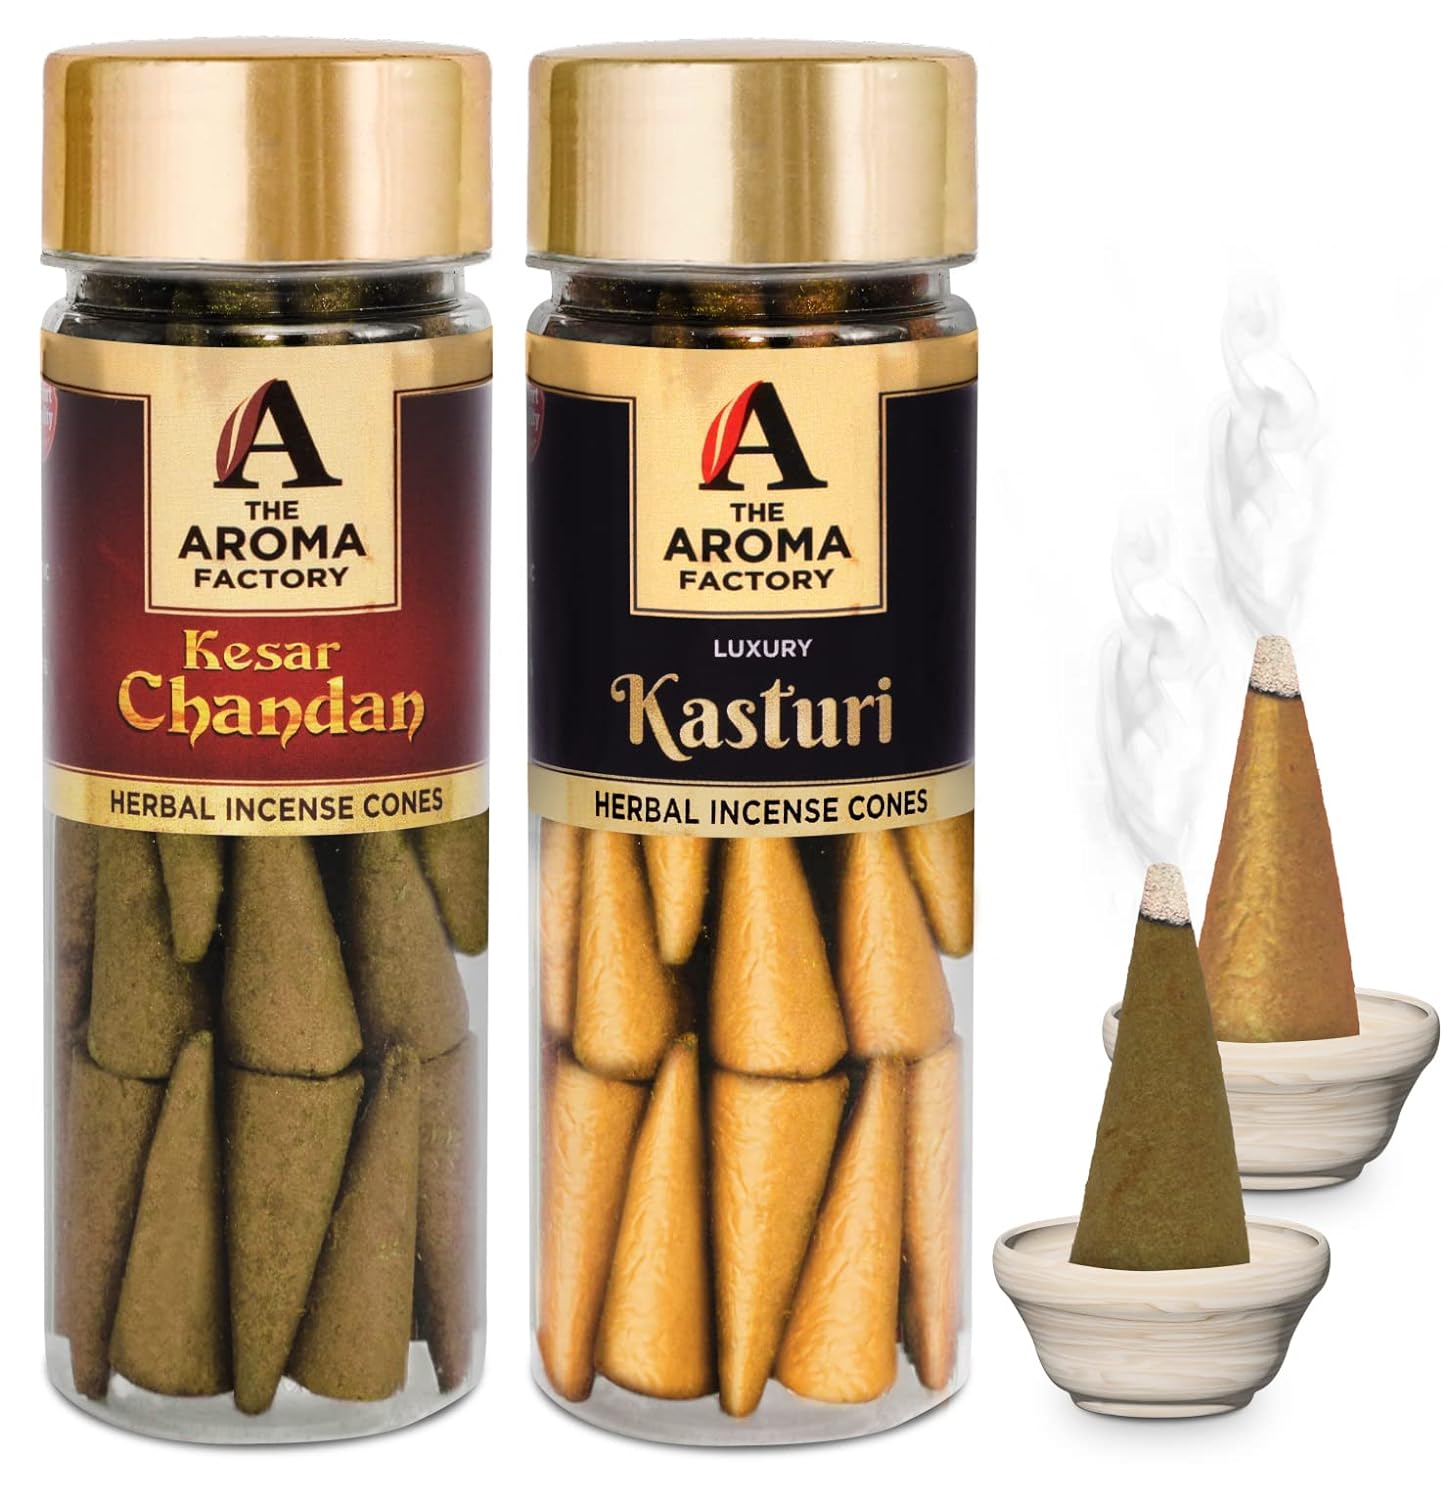 The Aroma Factory Incense Dhoop Cone for Puja, Kesar Chandan & Kasturi (100% Herbal & 0% Charcoal) 2 Bottles x 30 Cones